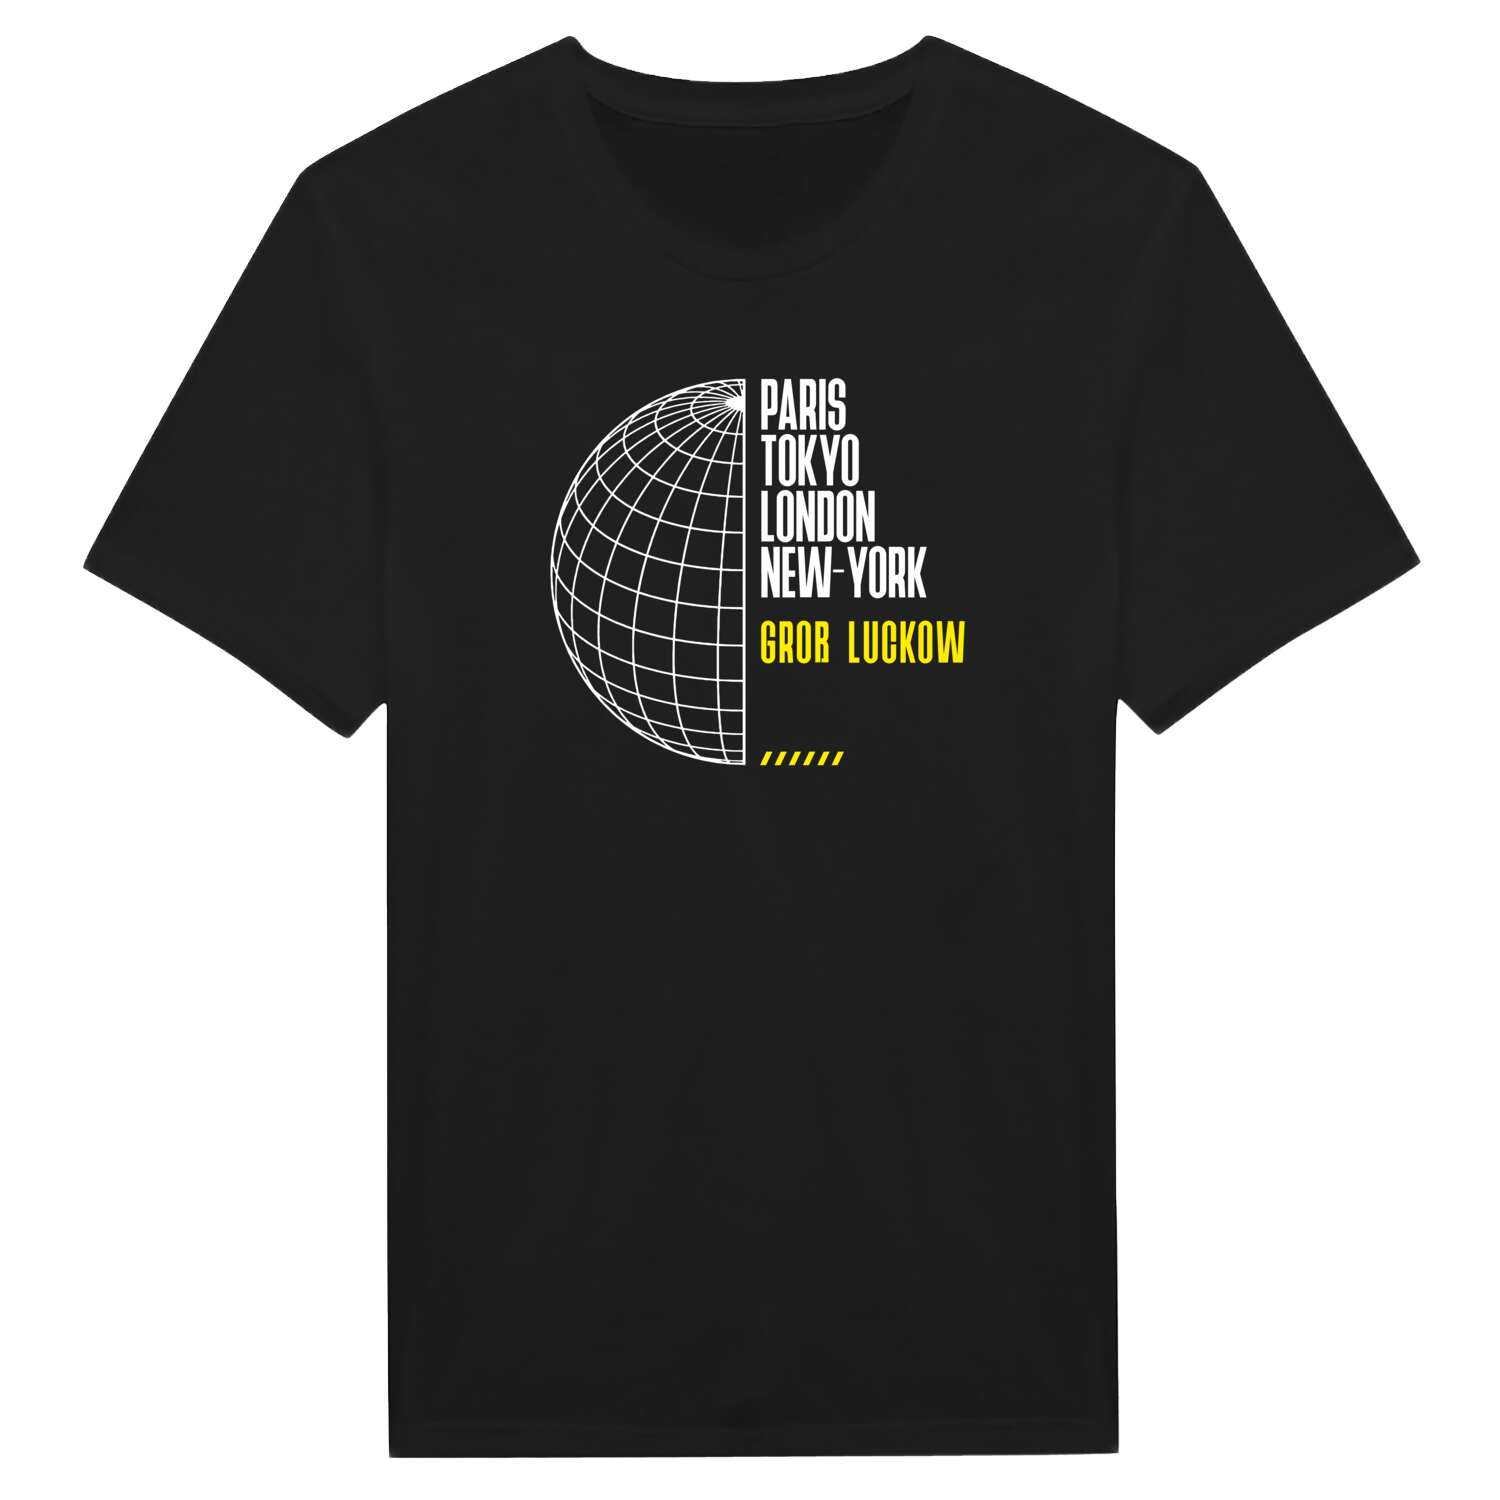 Groß Luckow T-Shirt »Paris Tokyo London«